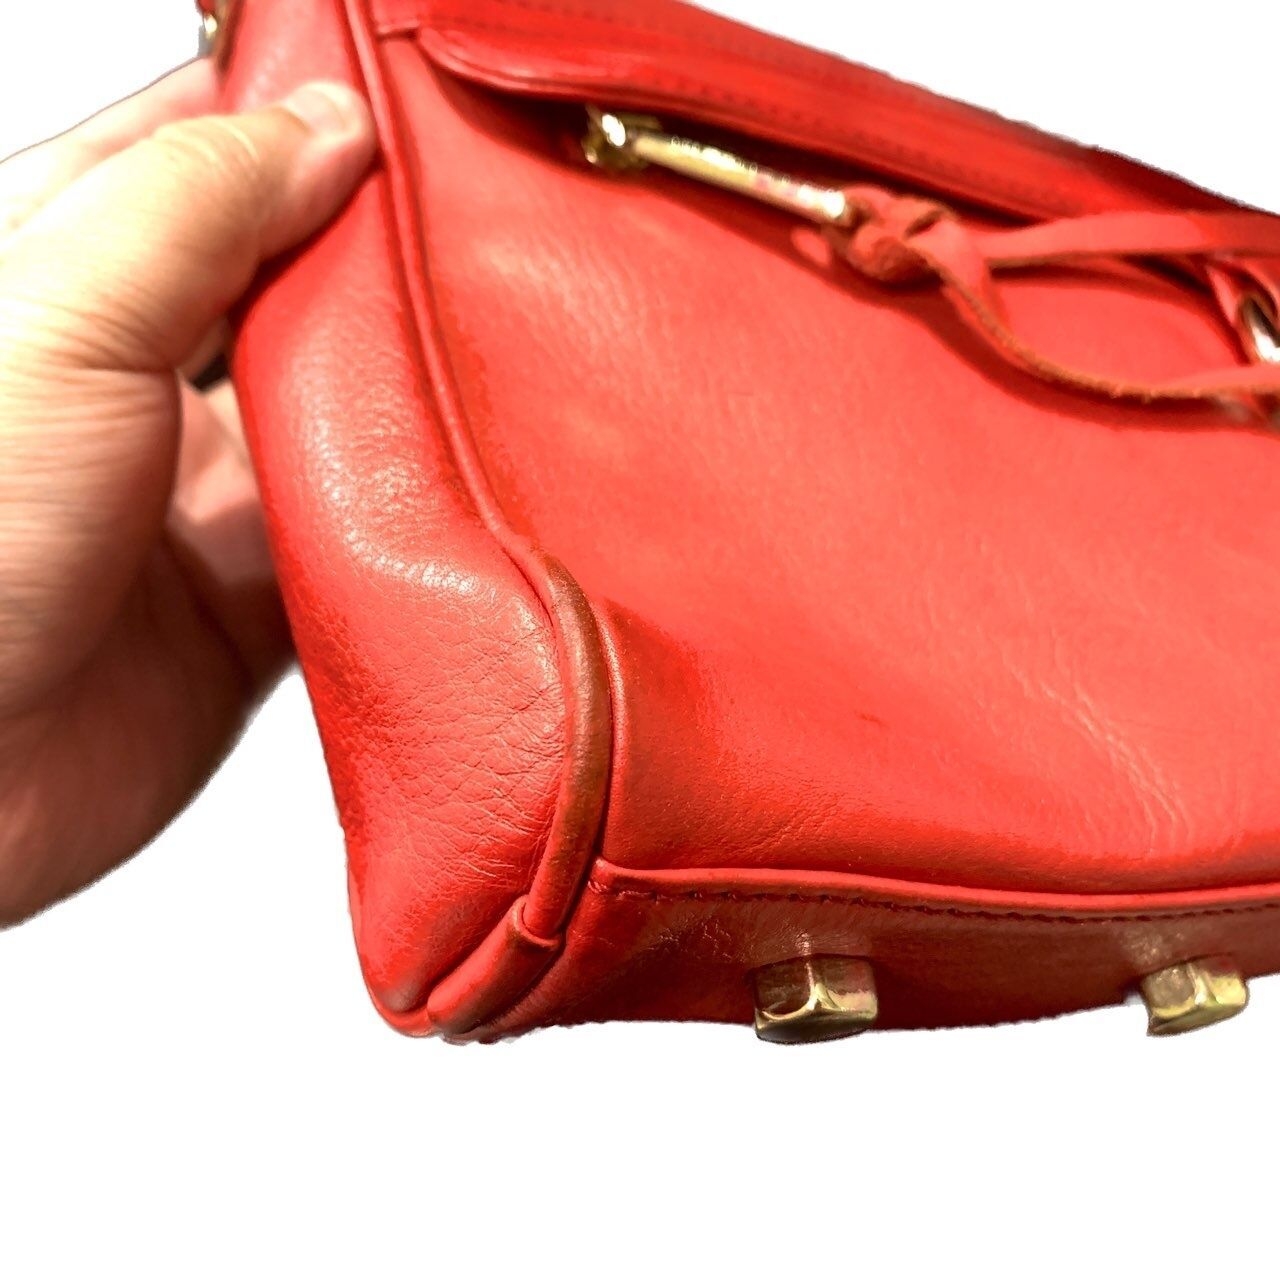 Rebecca Minkoff Red Sling Bag